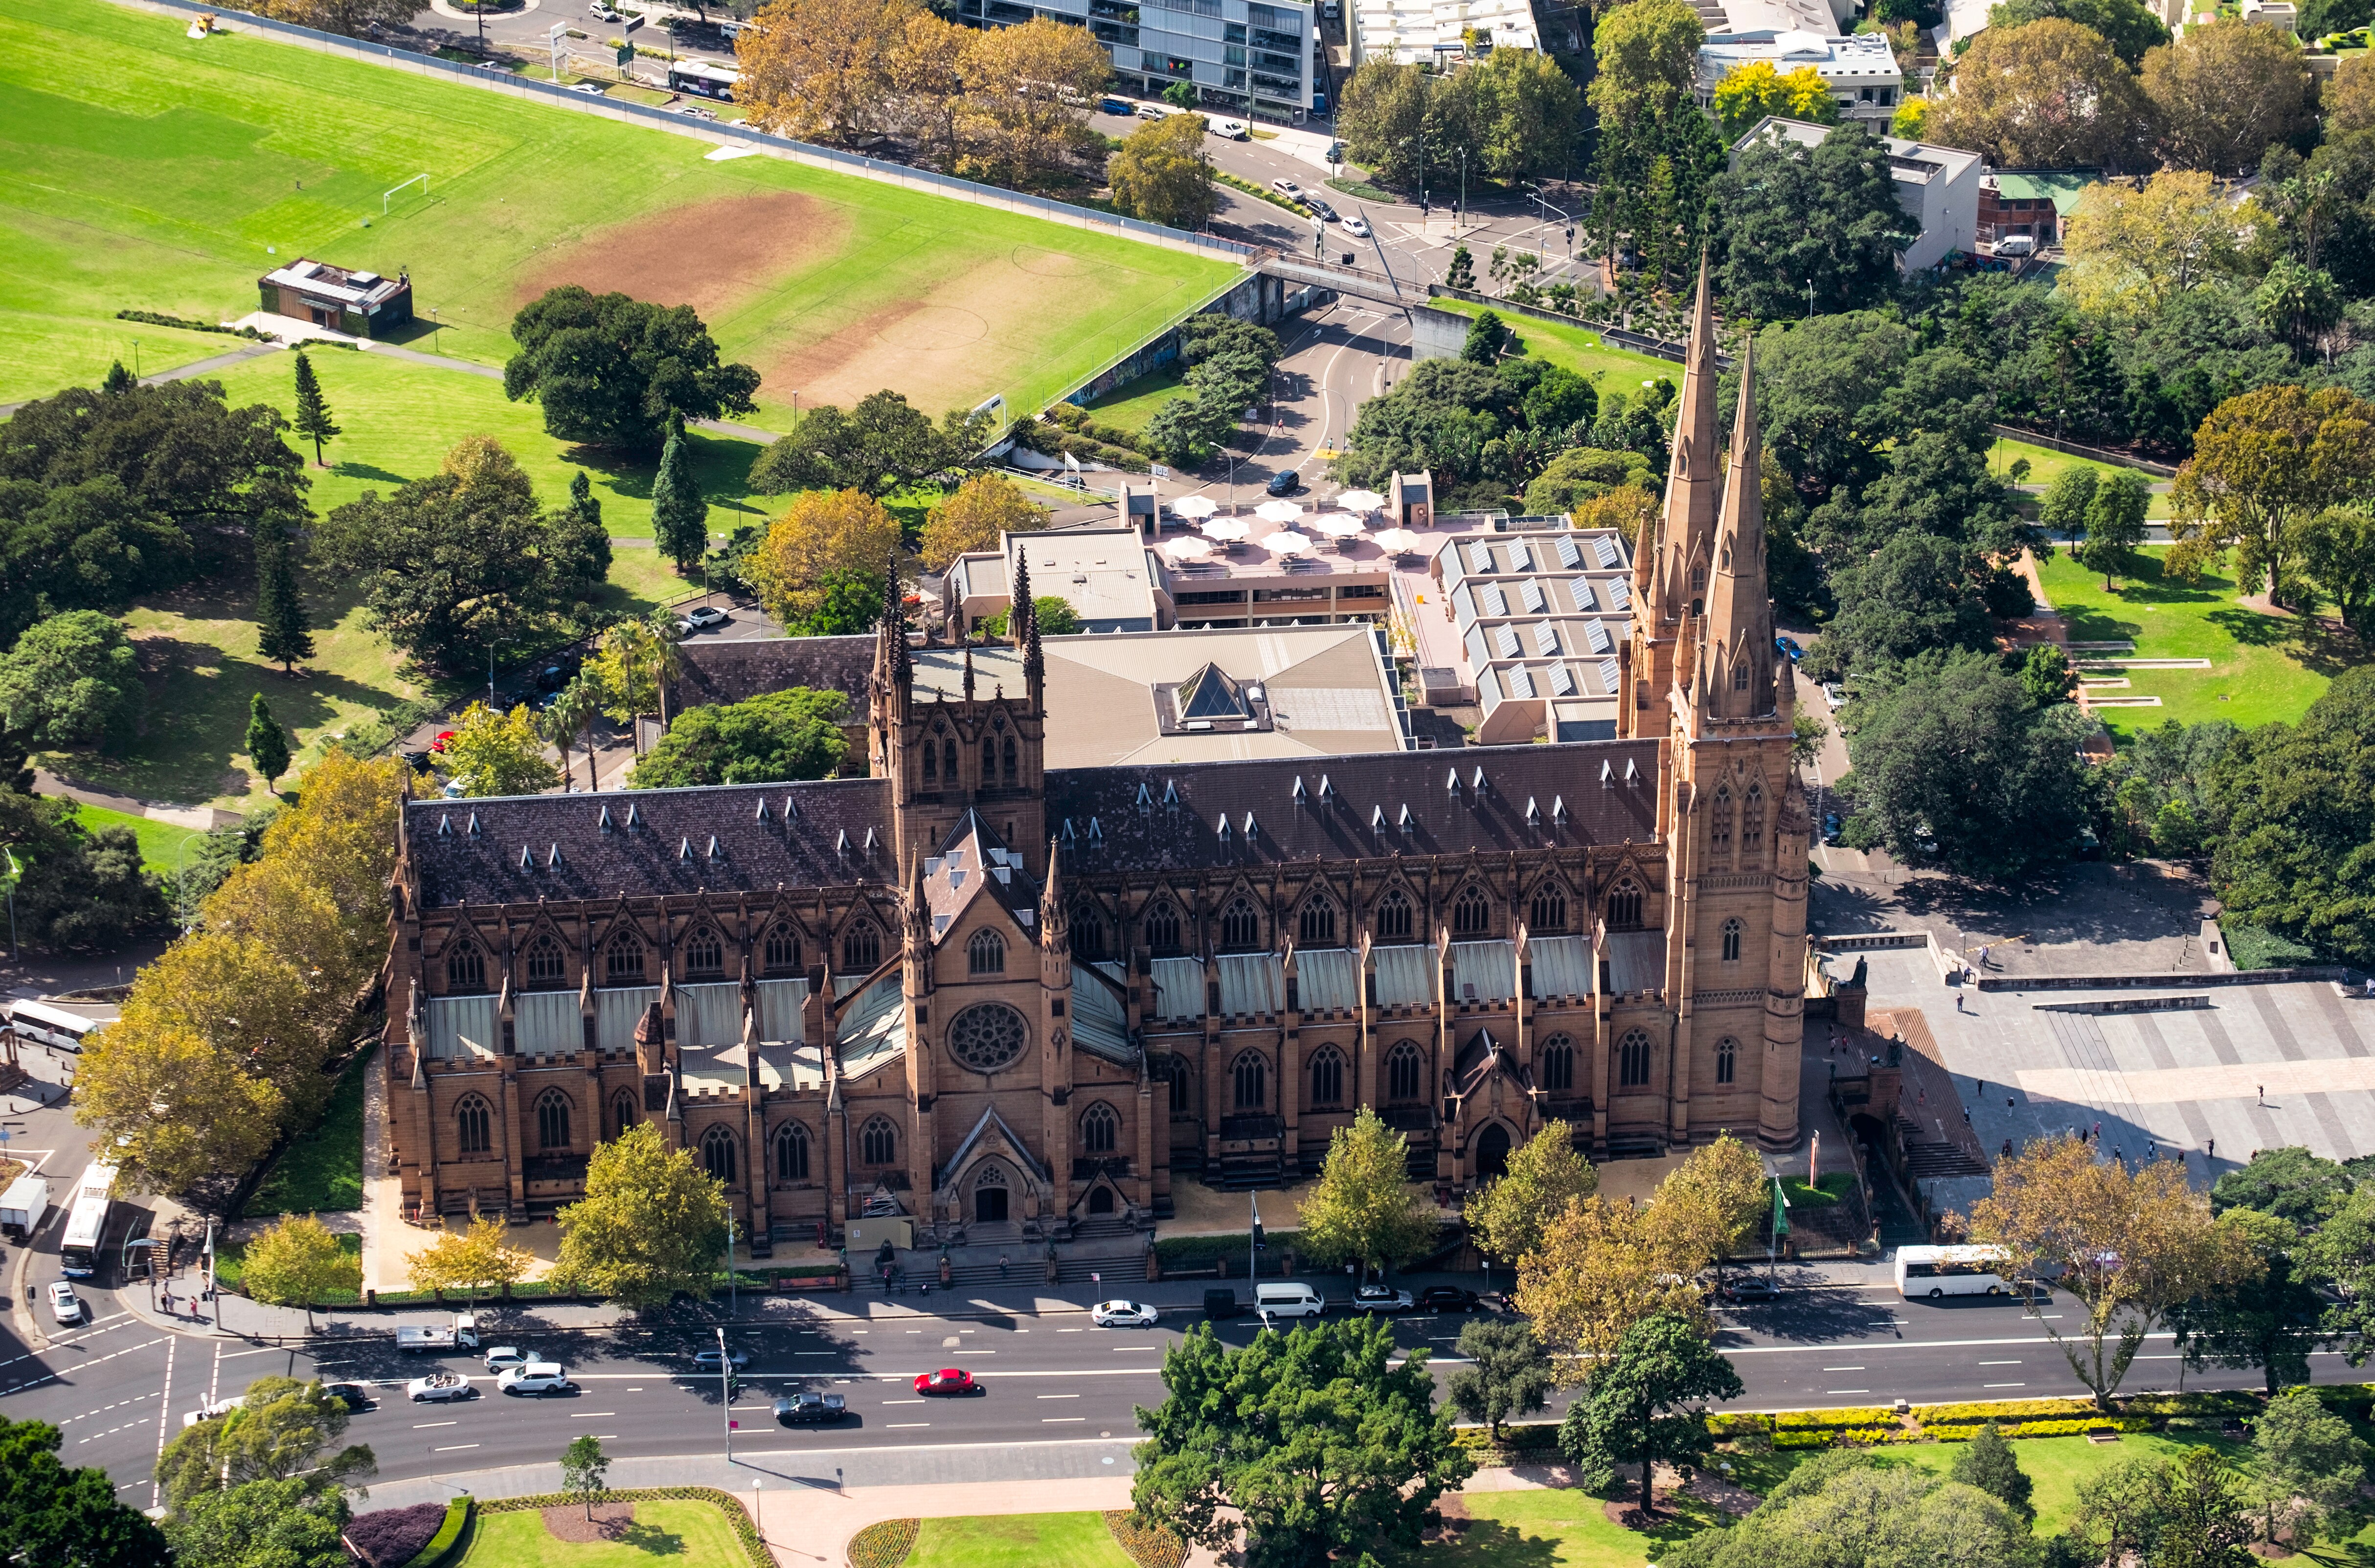 Catholicism's cultural grip on Australia